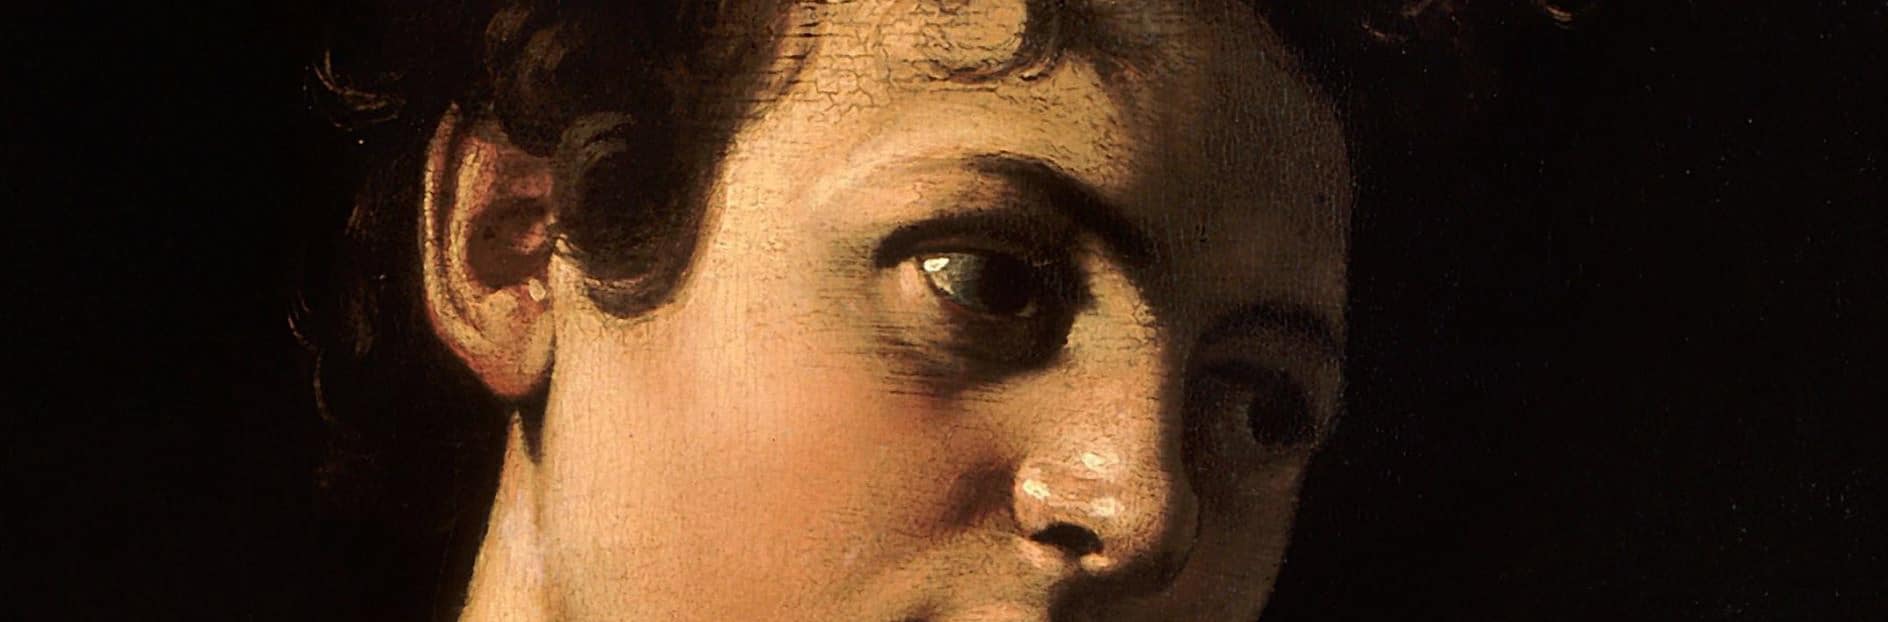 Michelangelo Merisi da Caravaggio. Technical Art Examination ...